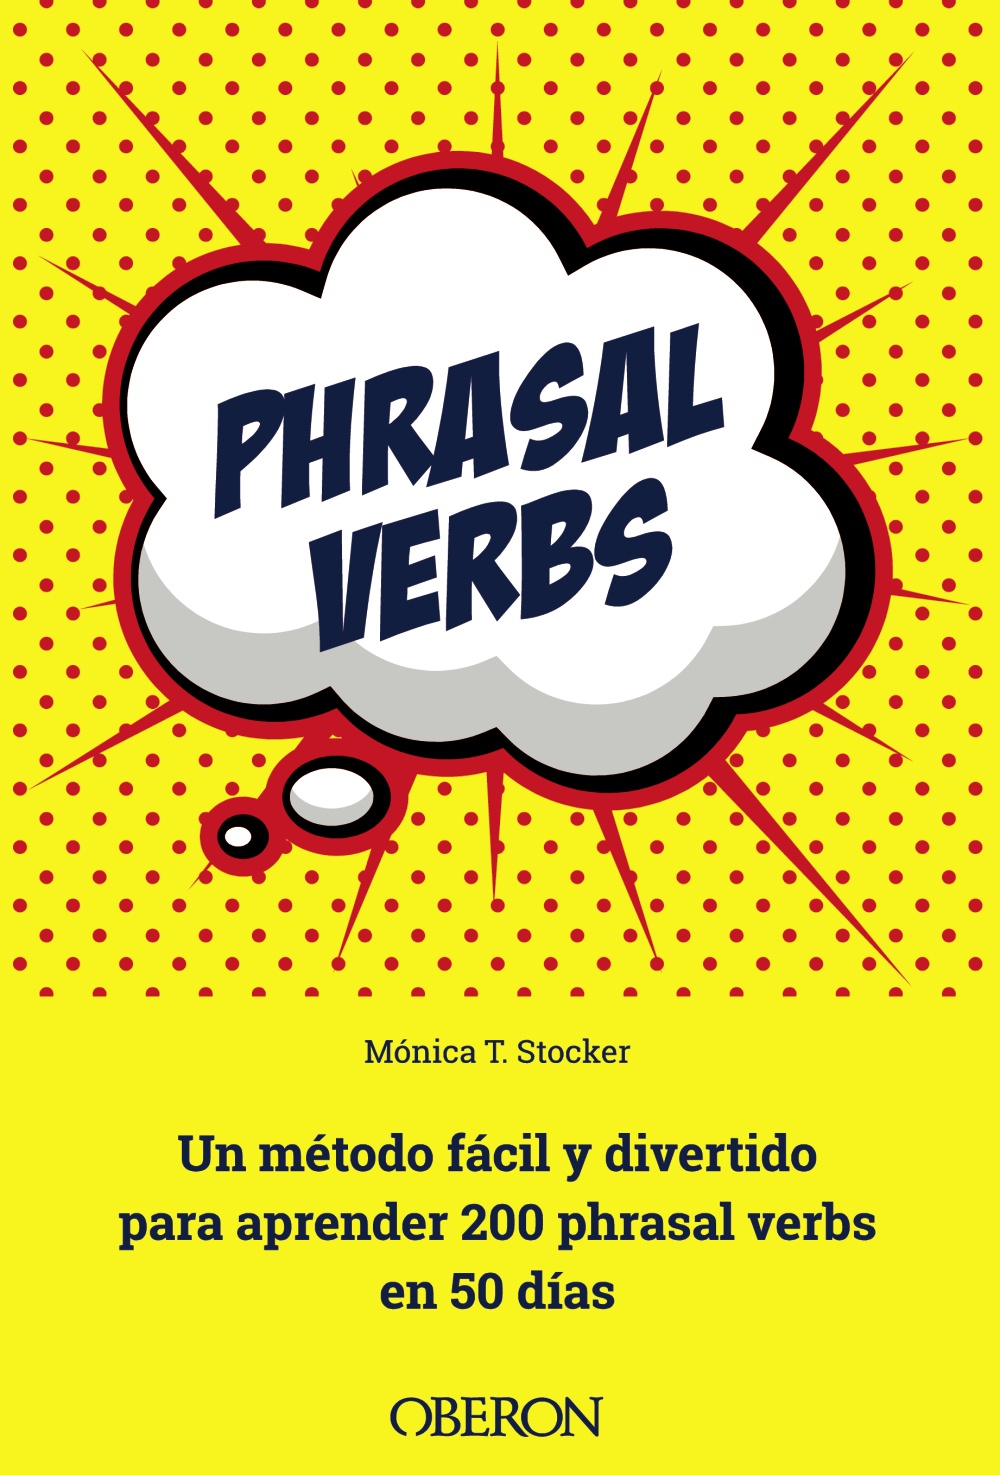 phrasal-verbs-978-84-415-3866-5.jpg